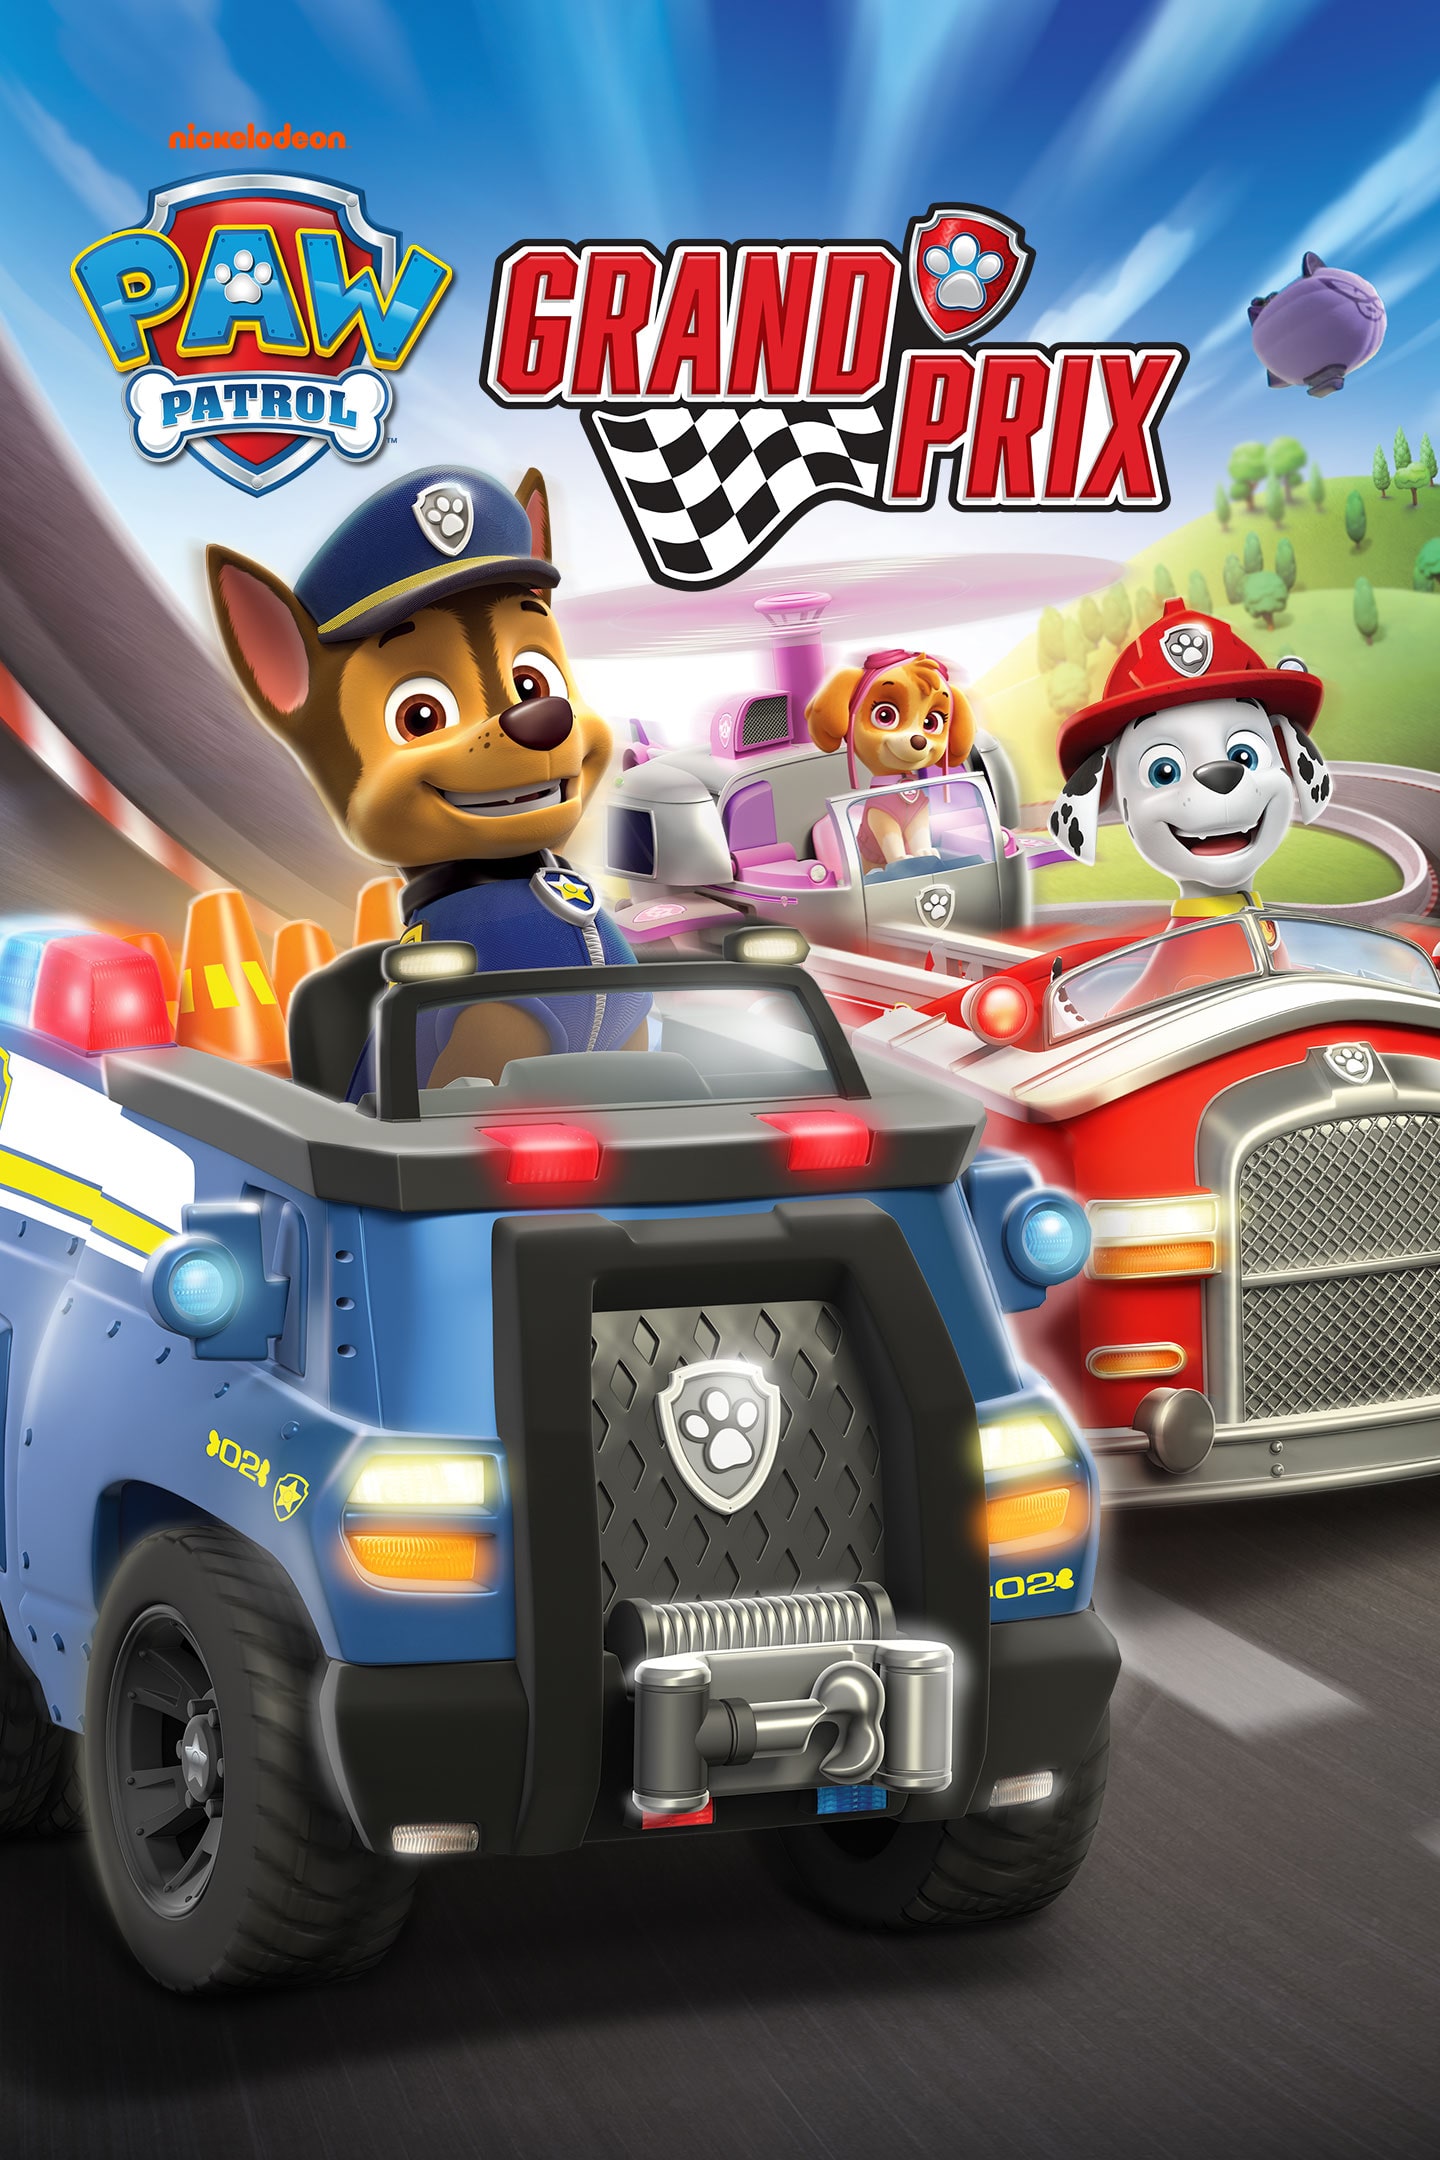 Patrol: Grand Prix